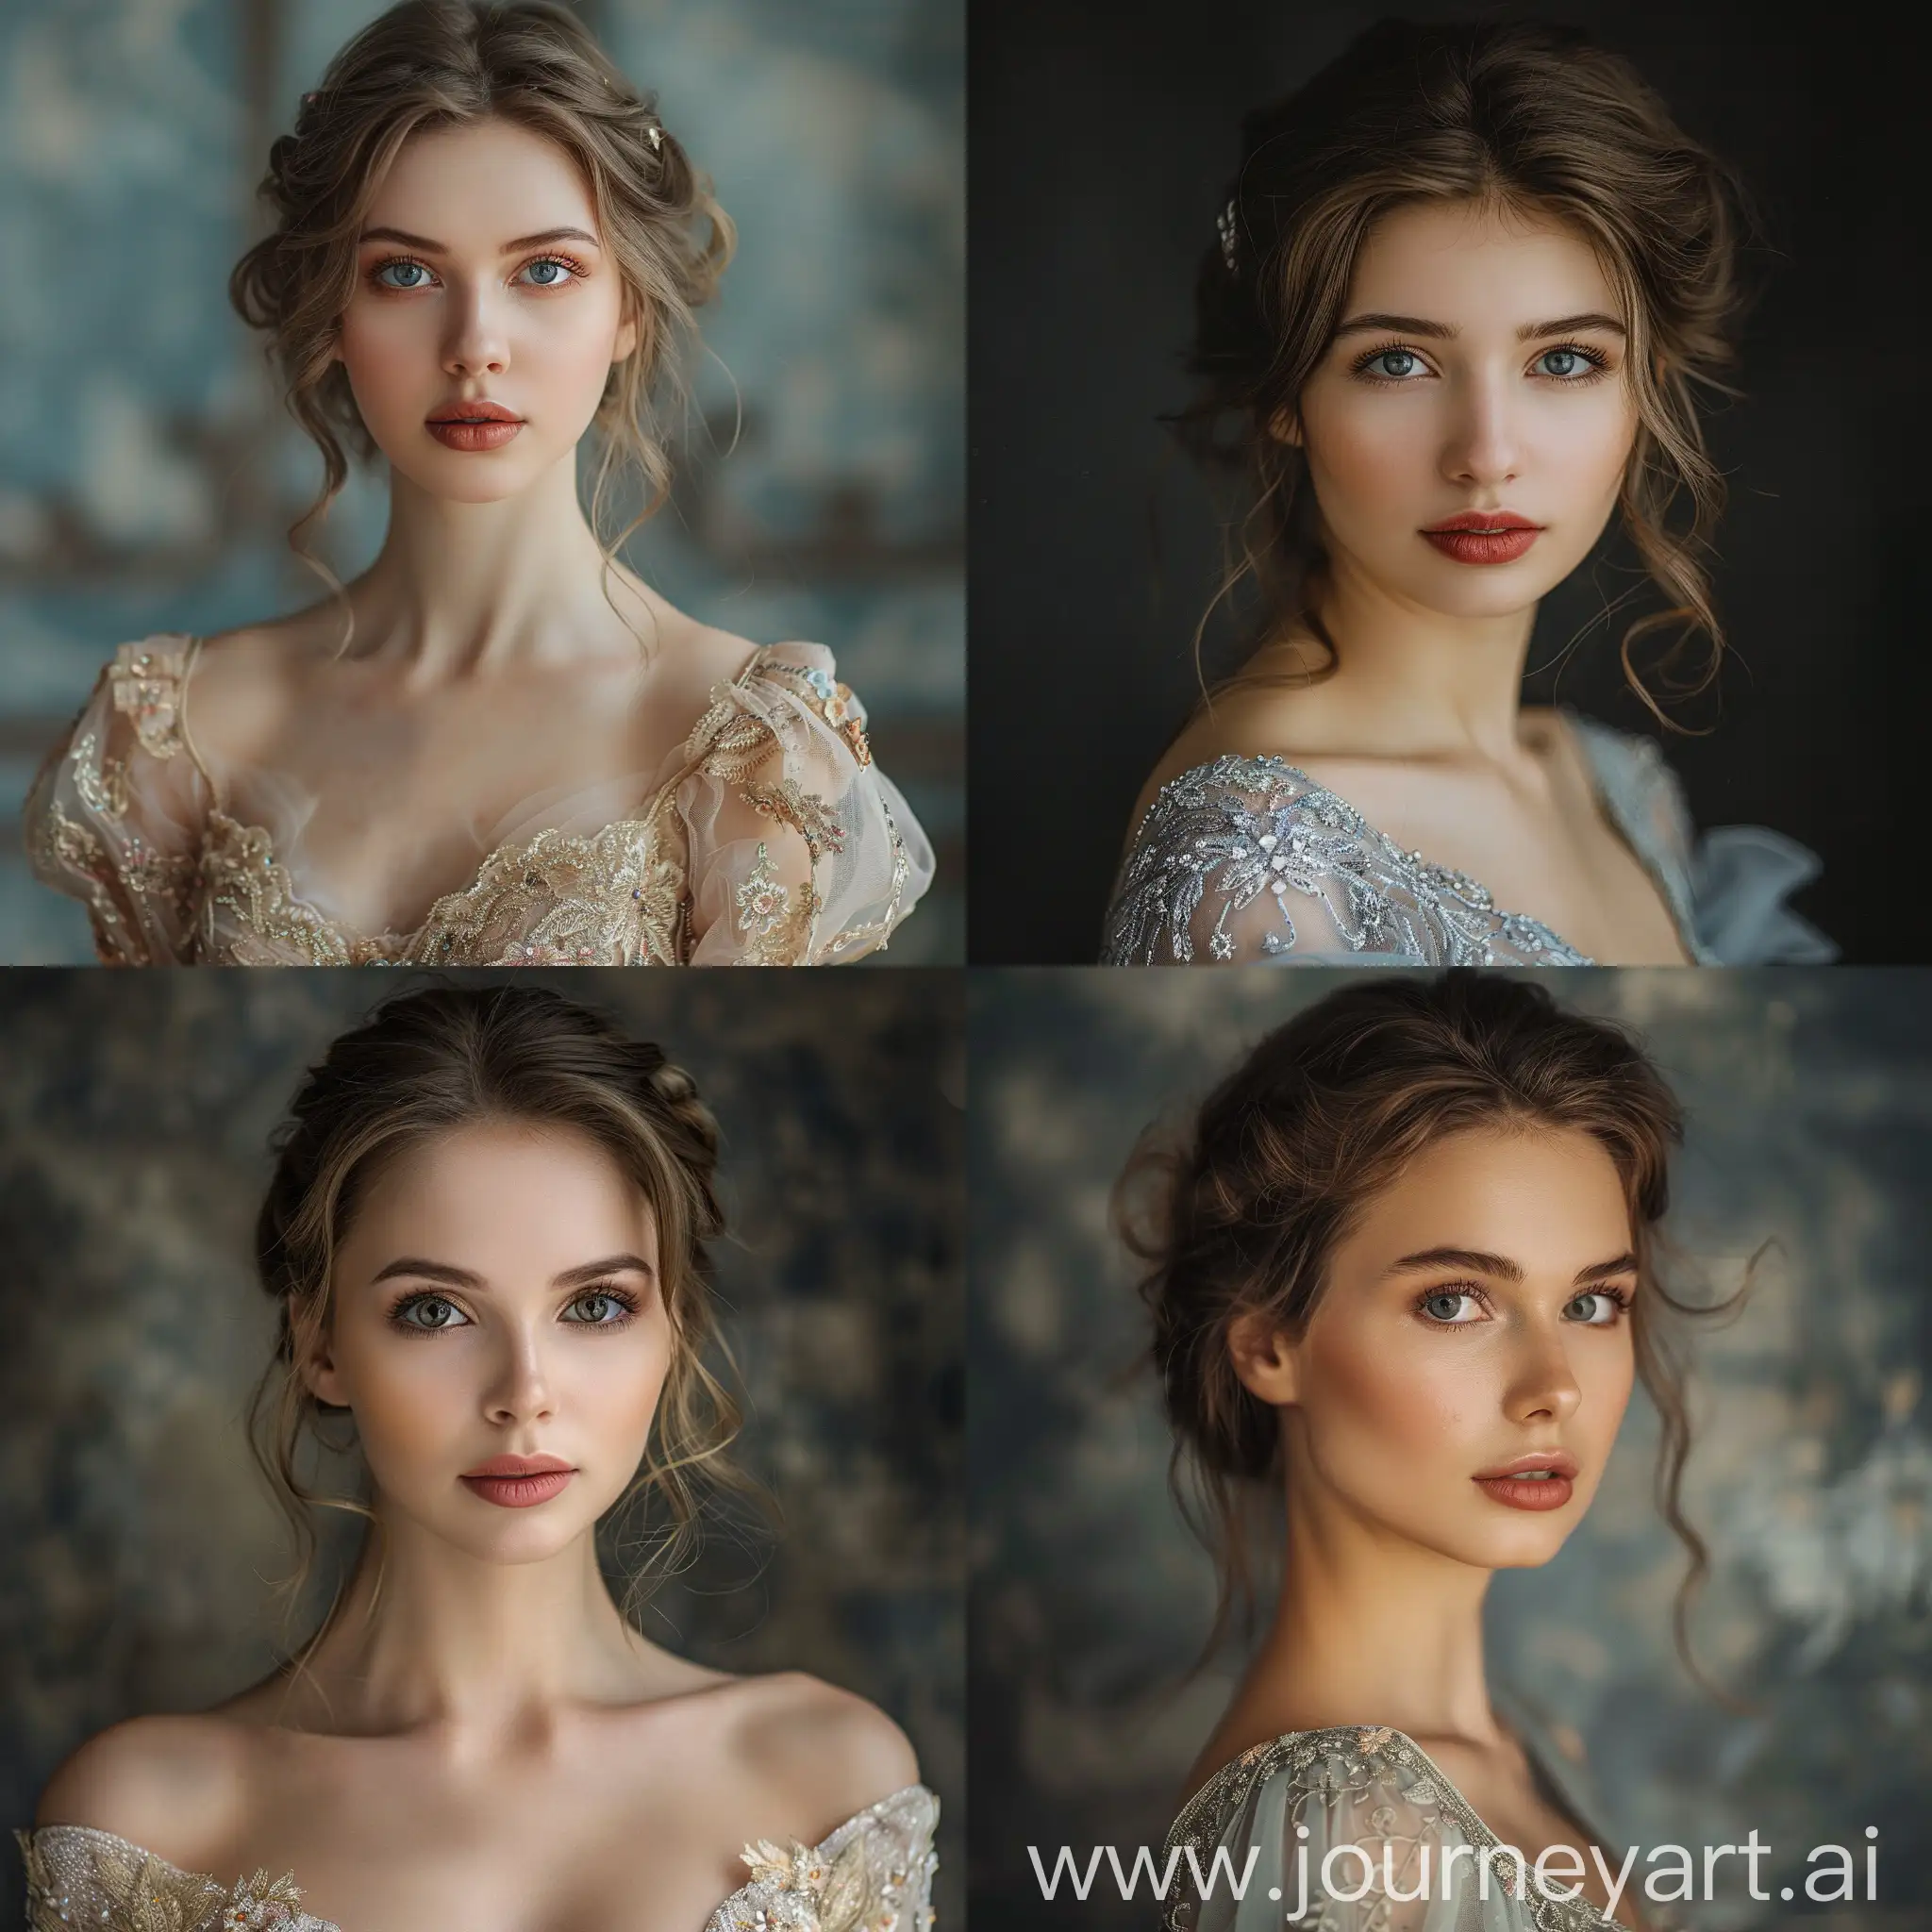 Stunning-Princess-Portrait-Elegant-25YearOld-Woman-in-Royal-Attire